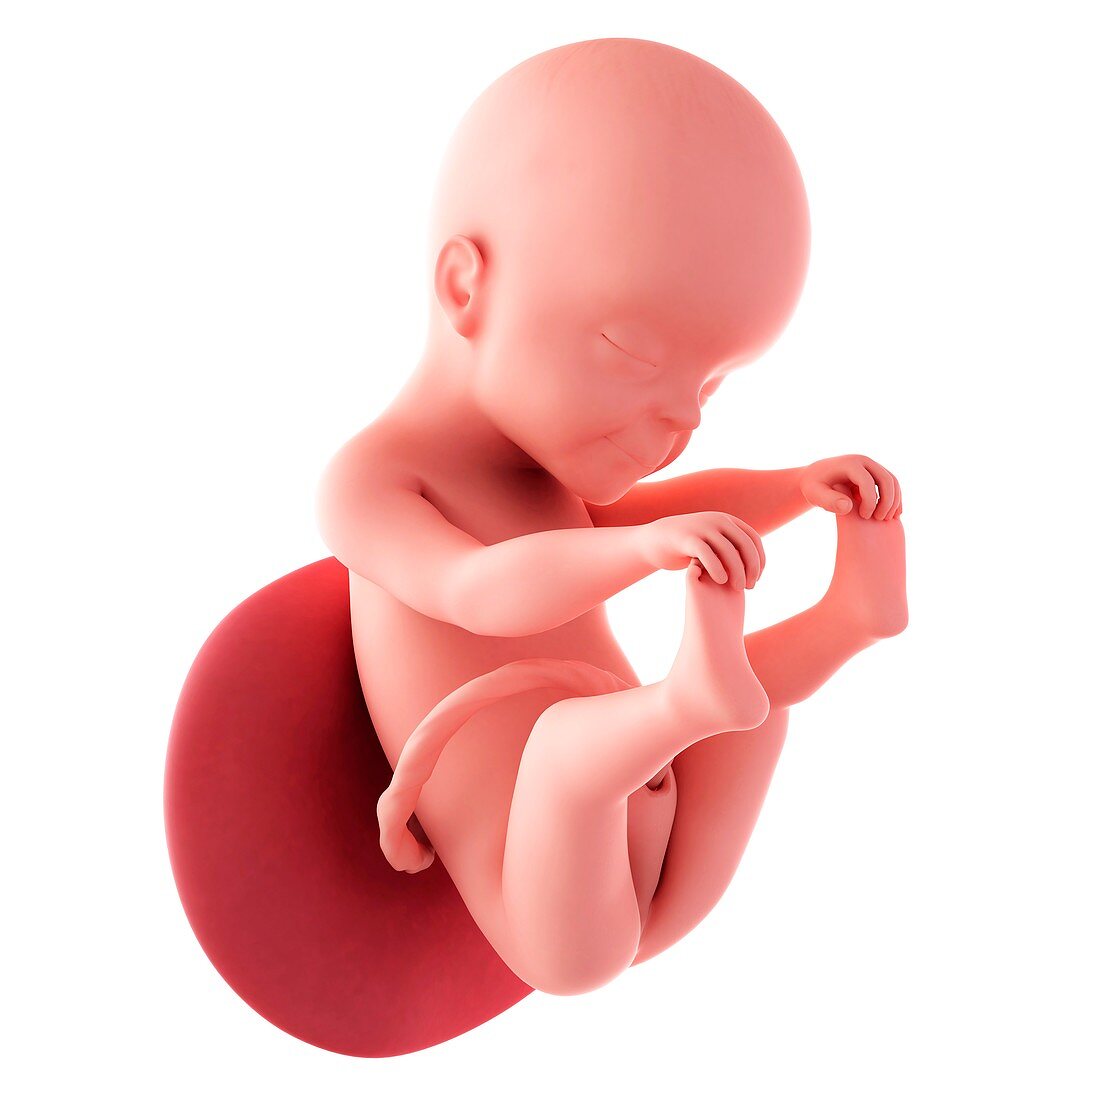 Human fetus age 25 weeks